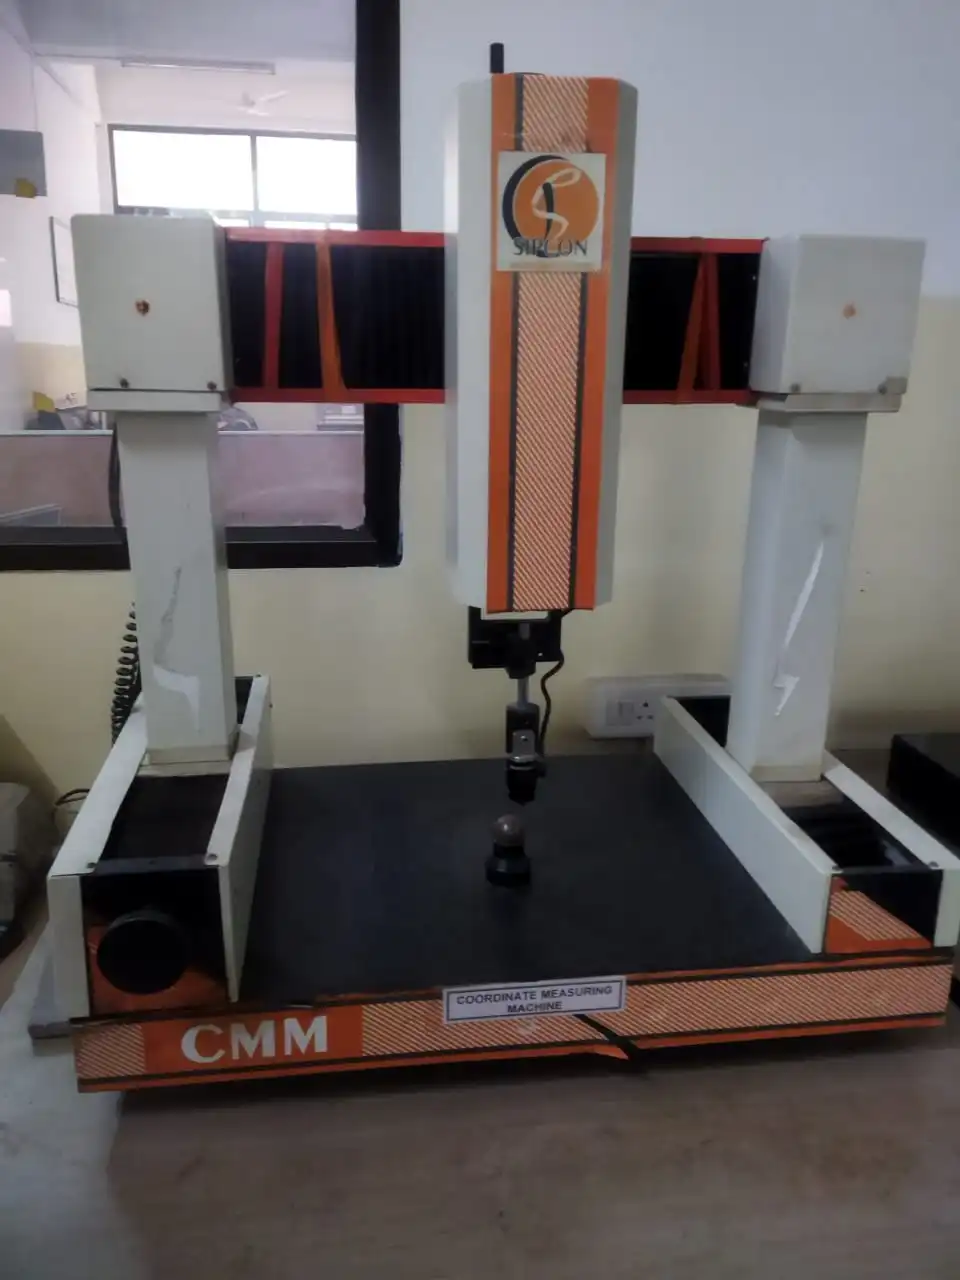 Coordinate Measuring Machine (CMM)